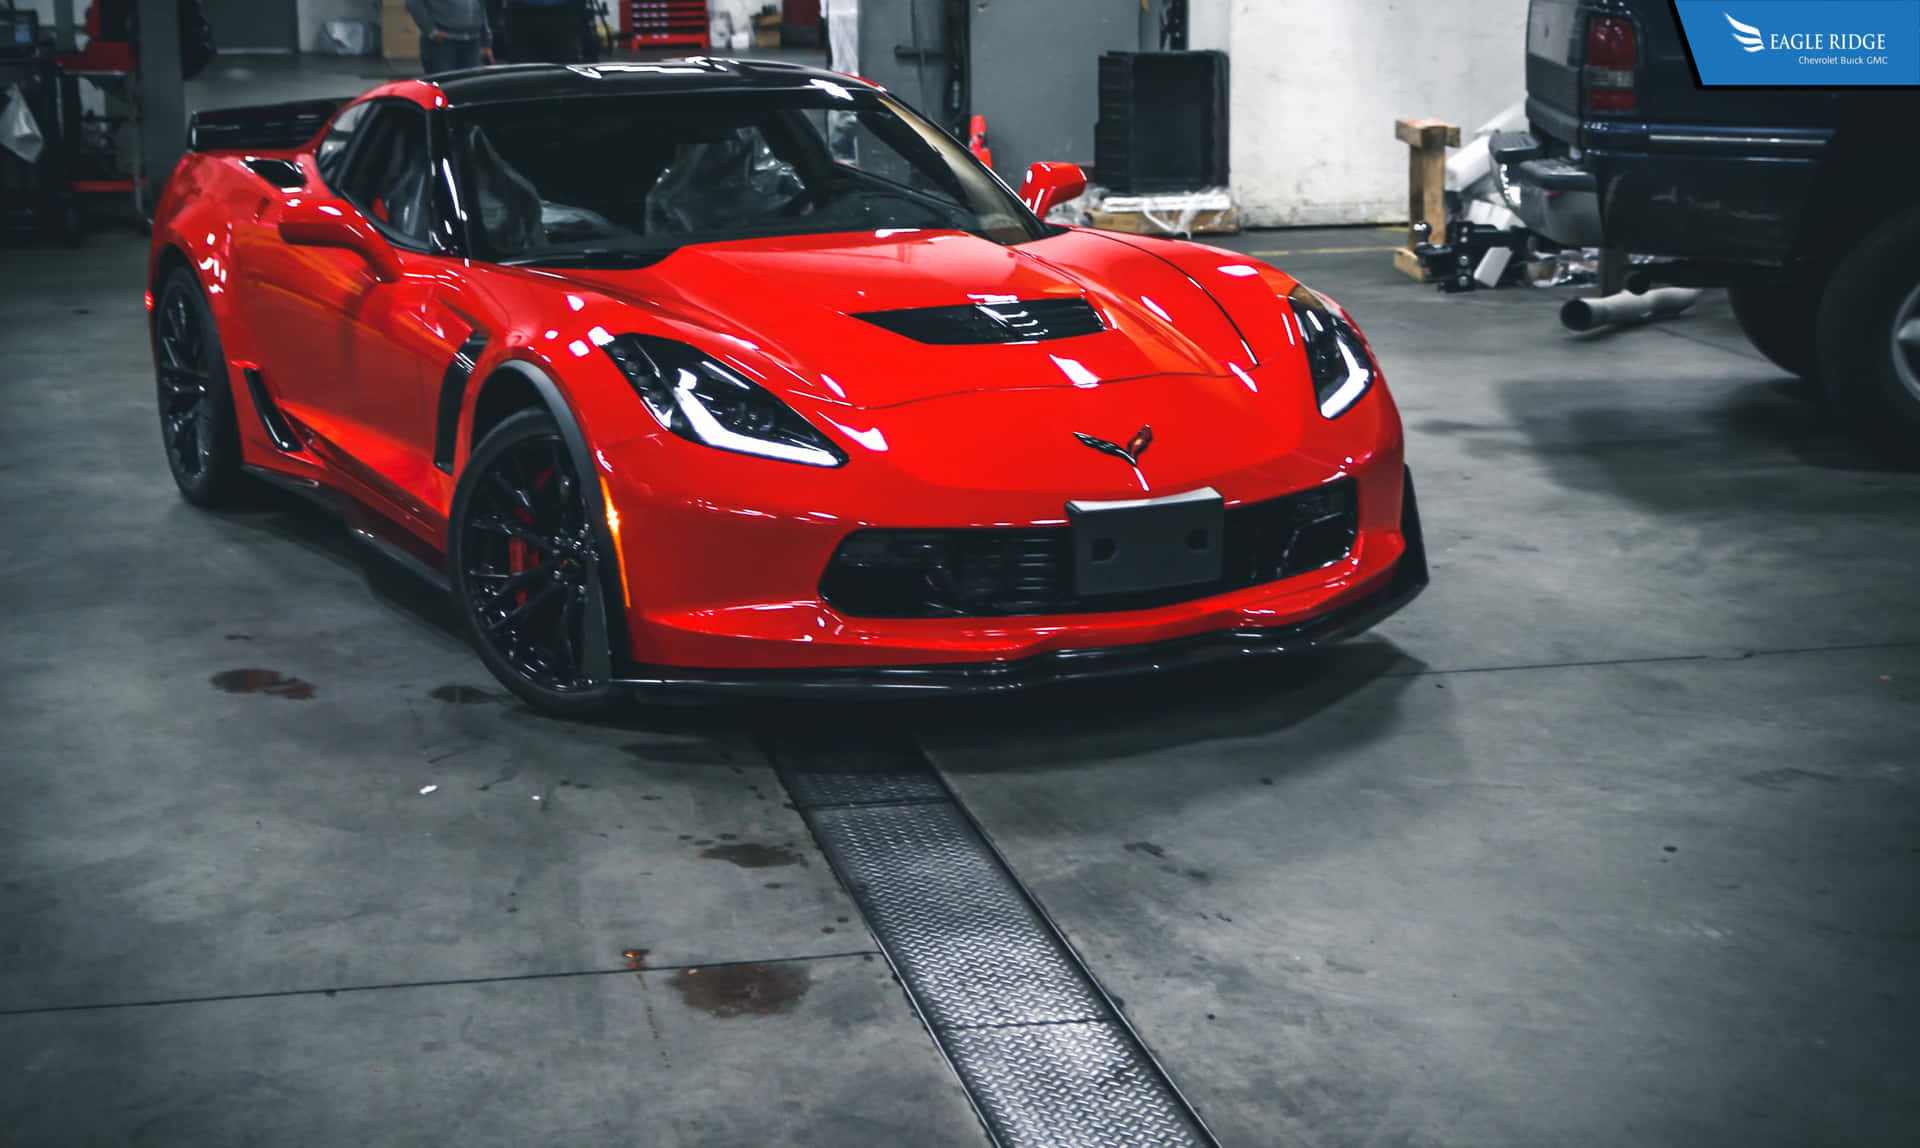 Striking Image of a Corvette Luxury Sports Car